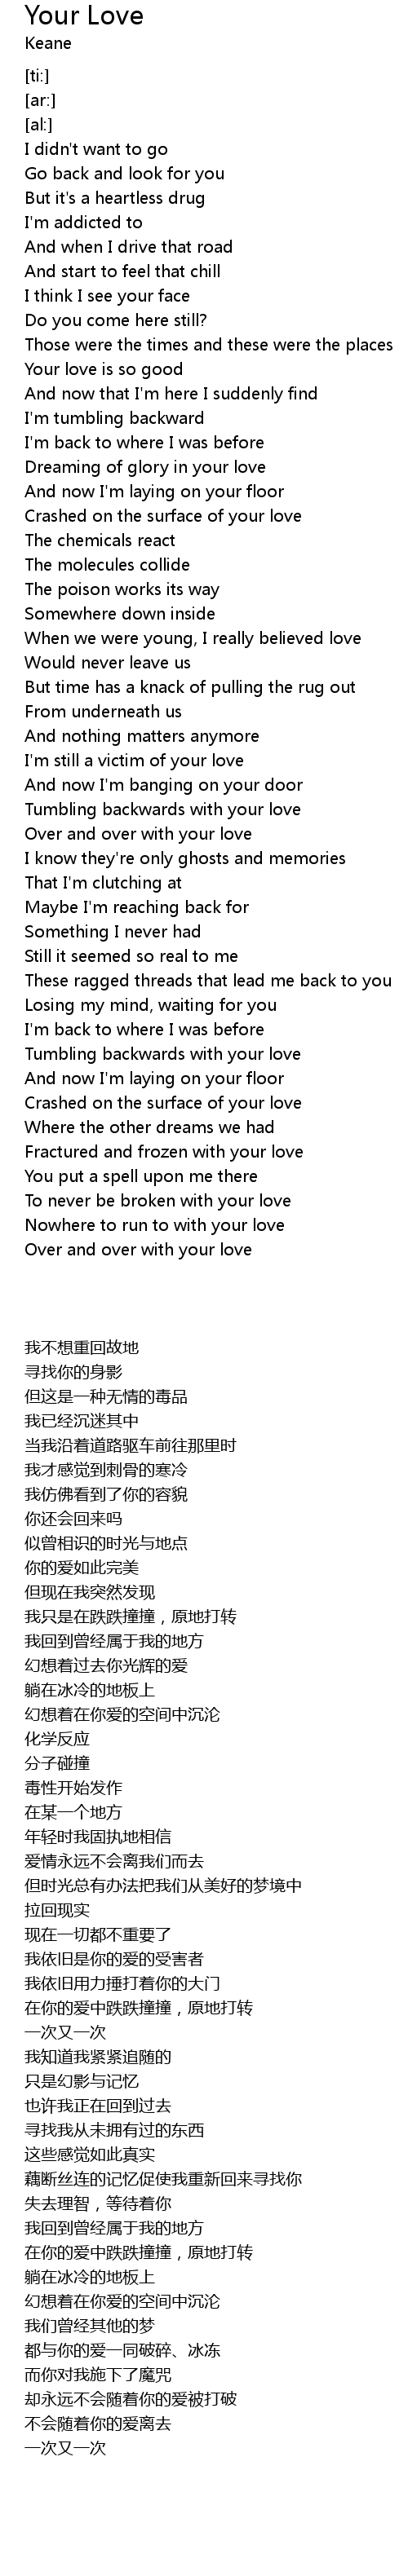 Your Love Lyrics